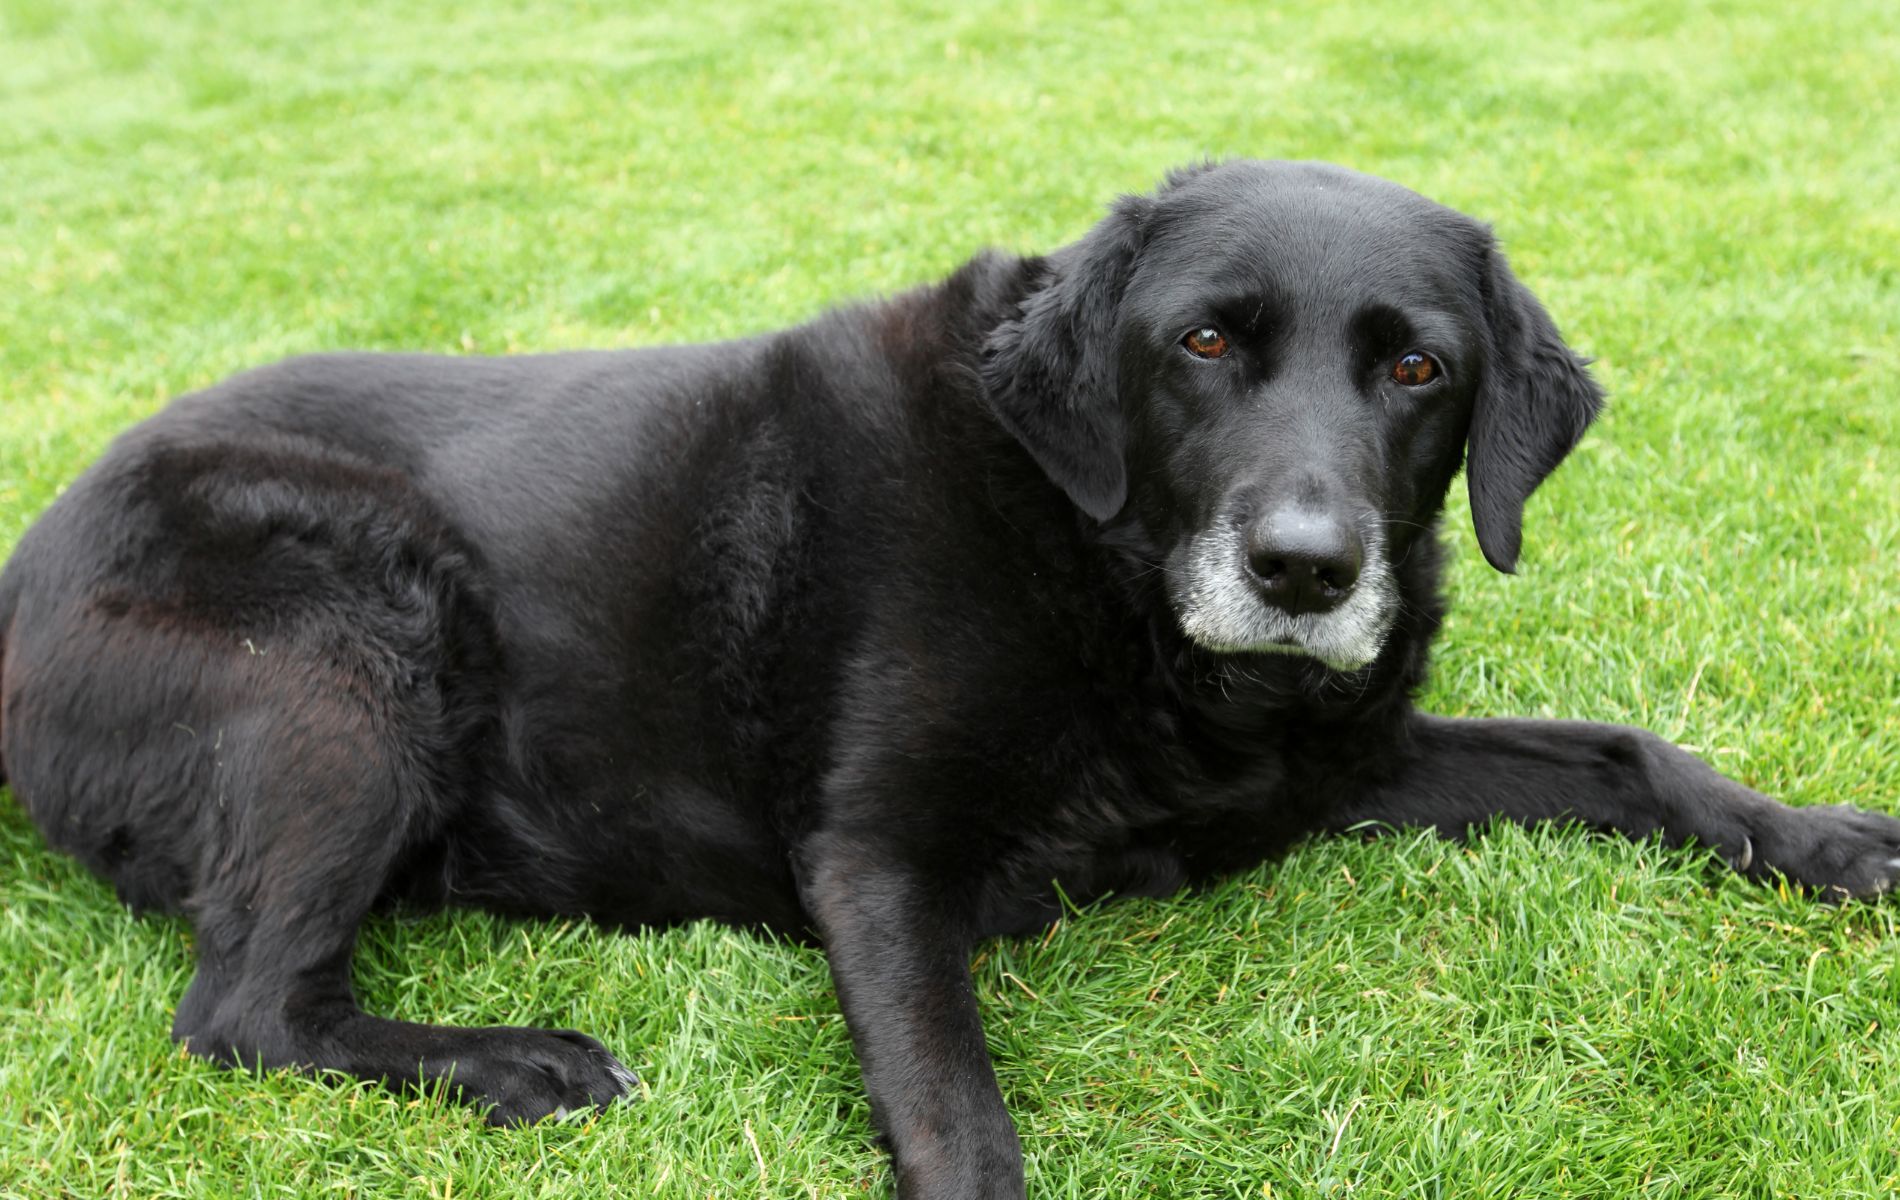 senior black dog with gray face